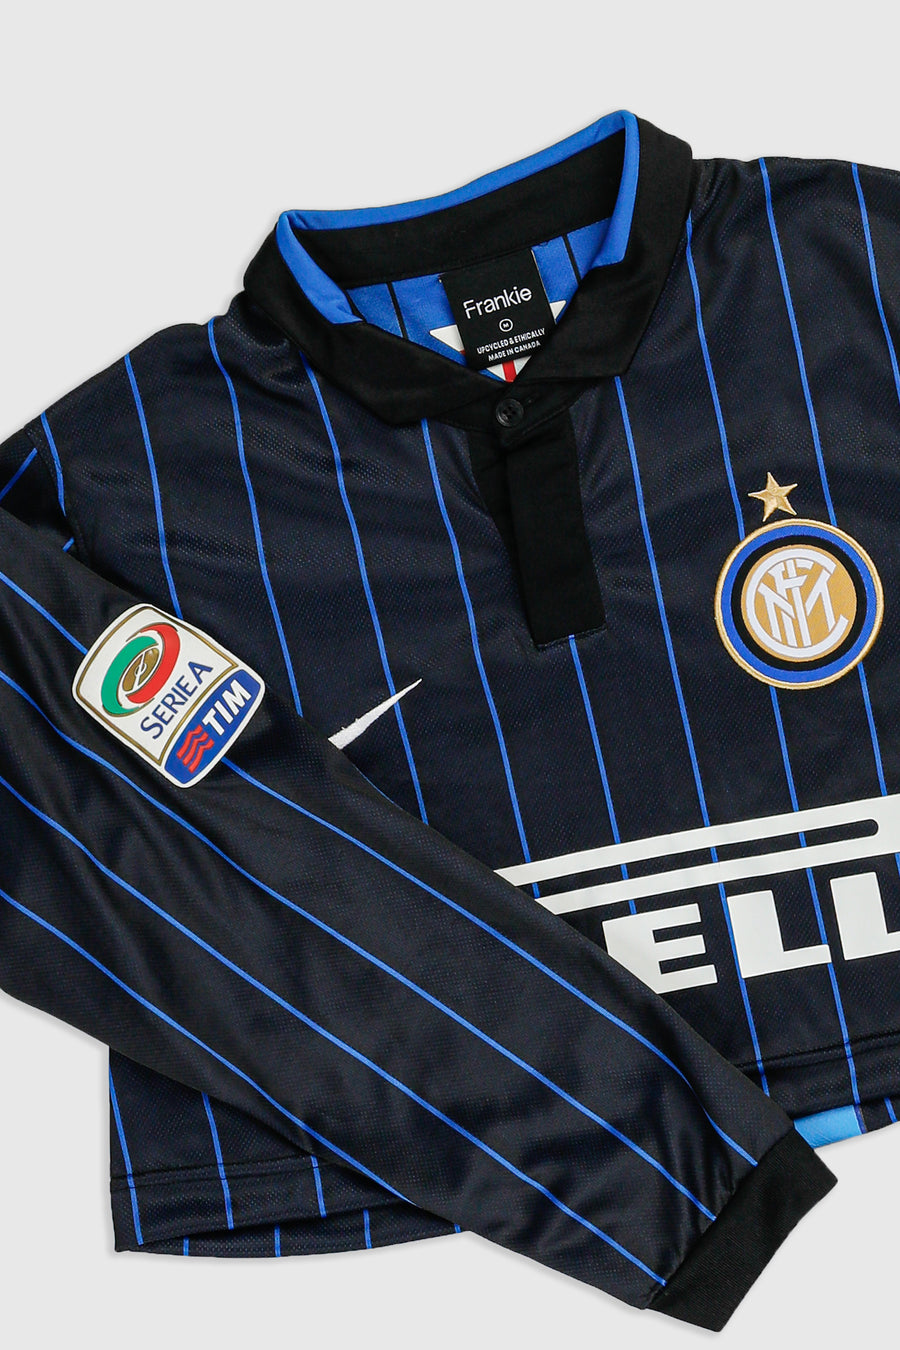 Rework Crop Inter Milan Soccer Long Sleeve Jersey - M